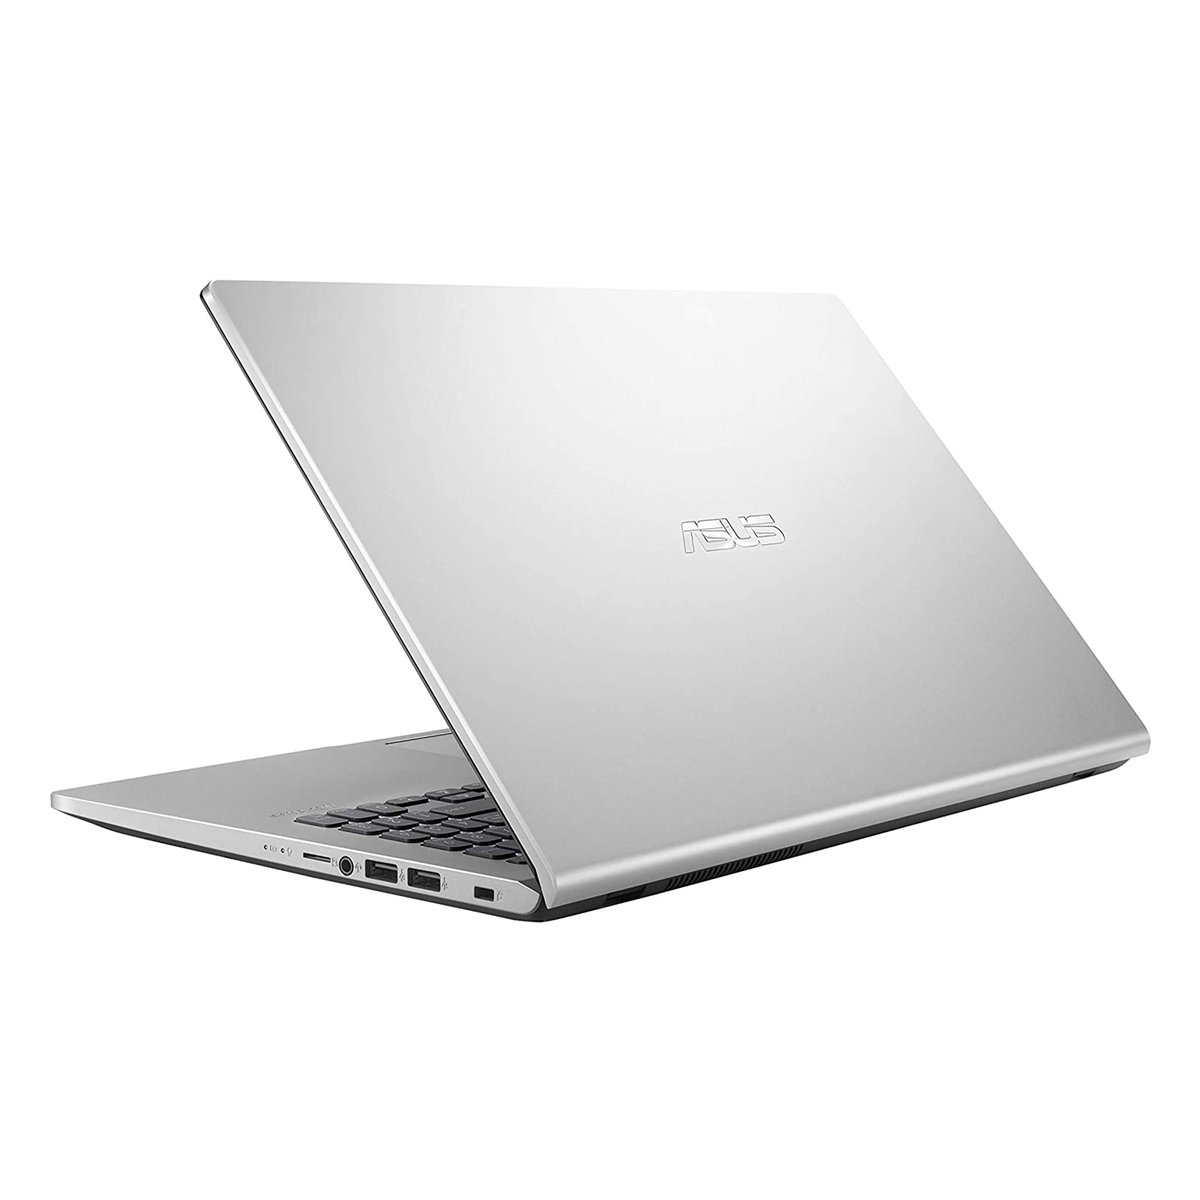 Asus Vivobook X509JB-EJ204T Laptop (Transparent Silver) - Intel Core i7-1065G7 Processor 1.3 GHz, 8GB RAM, 512GB SSD, Nvidia GeForce MX110 2GB, 15.6 inches, Windows 10 Home, Eng-Arb-KB